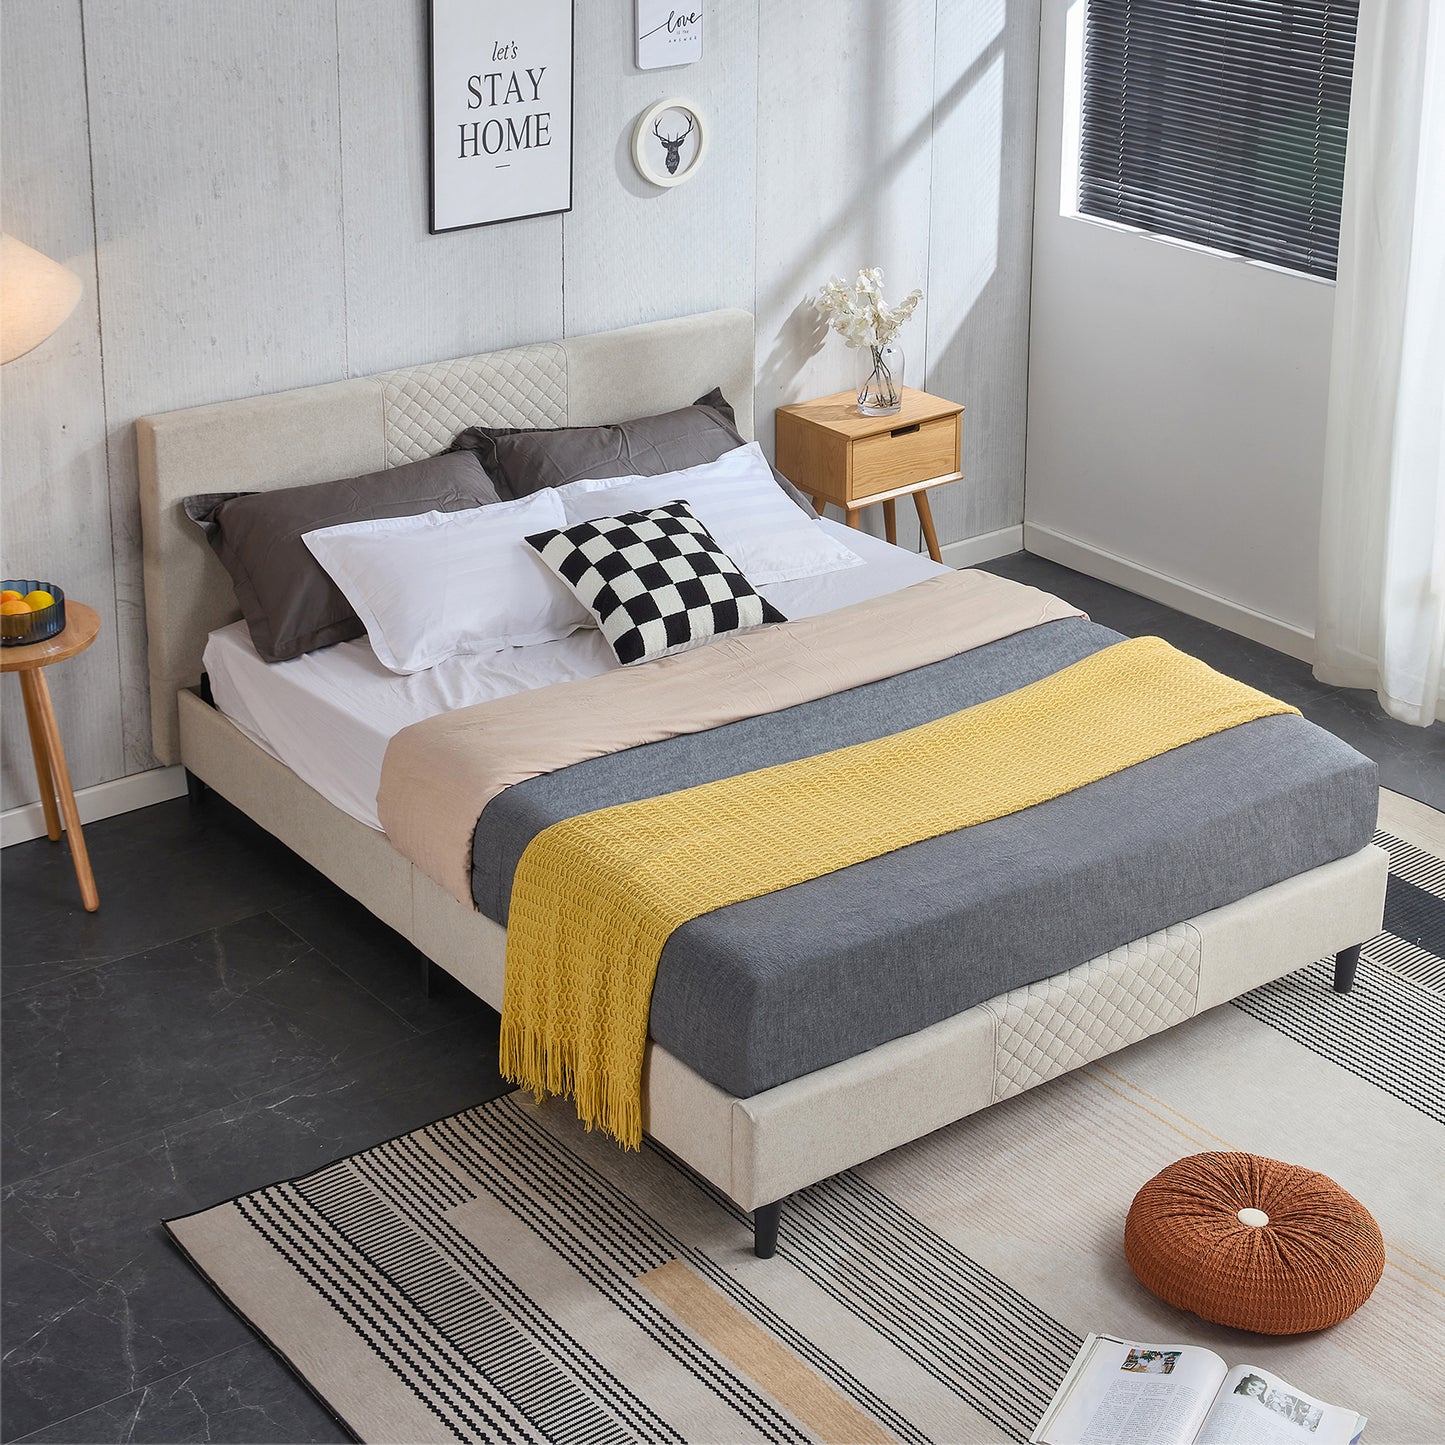 HSUNNS Full Size Bed Frame, Platform Bed Frame with Upholstered Tufted Headboard, Modern Bedroom Furniture Full Bed Frame with Strong Slat Support, Wood Legs, Beige